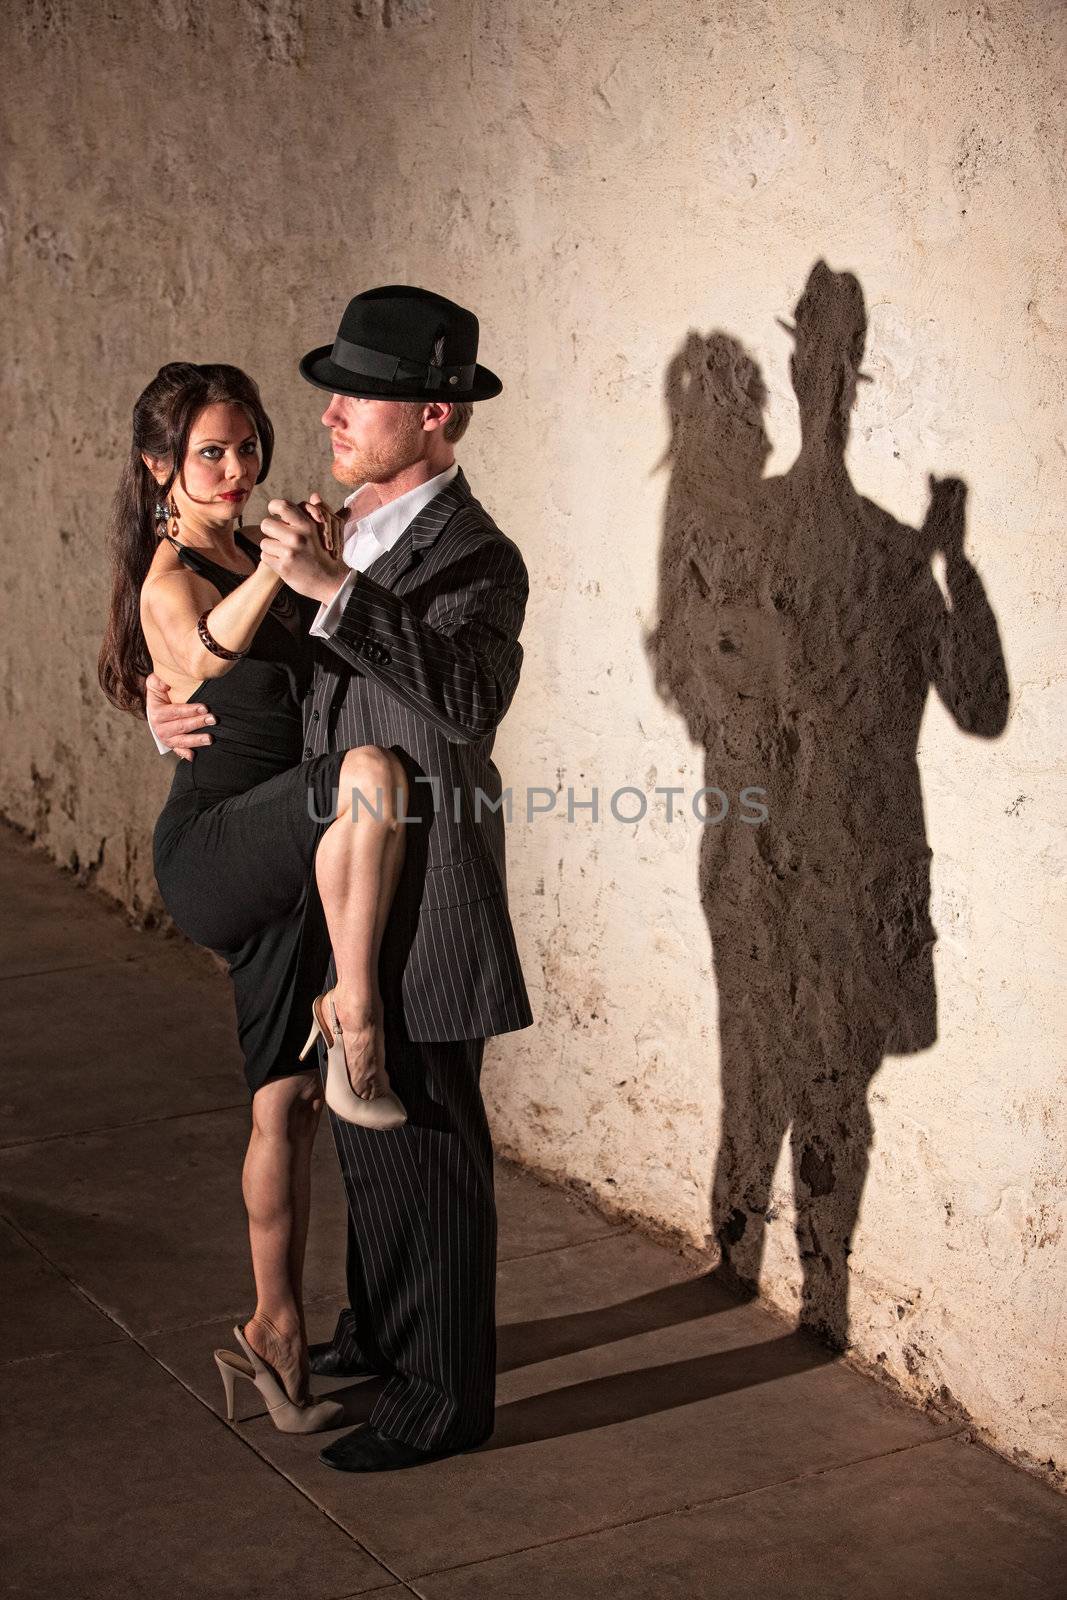 Beautiful female tango dancer with leg up next to partner